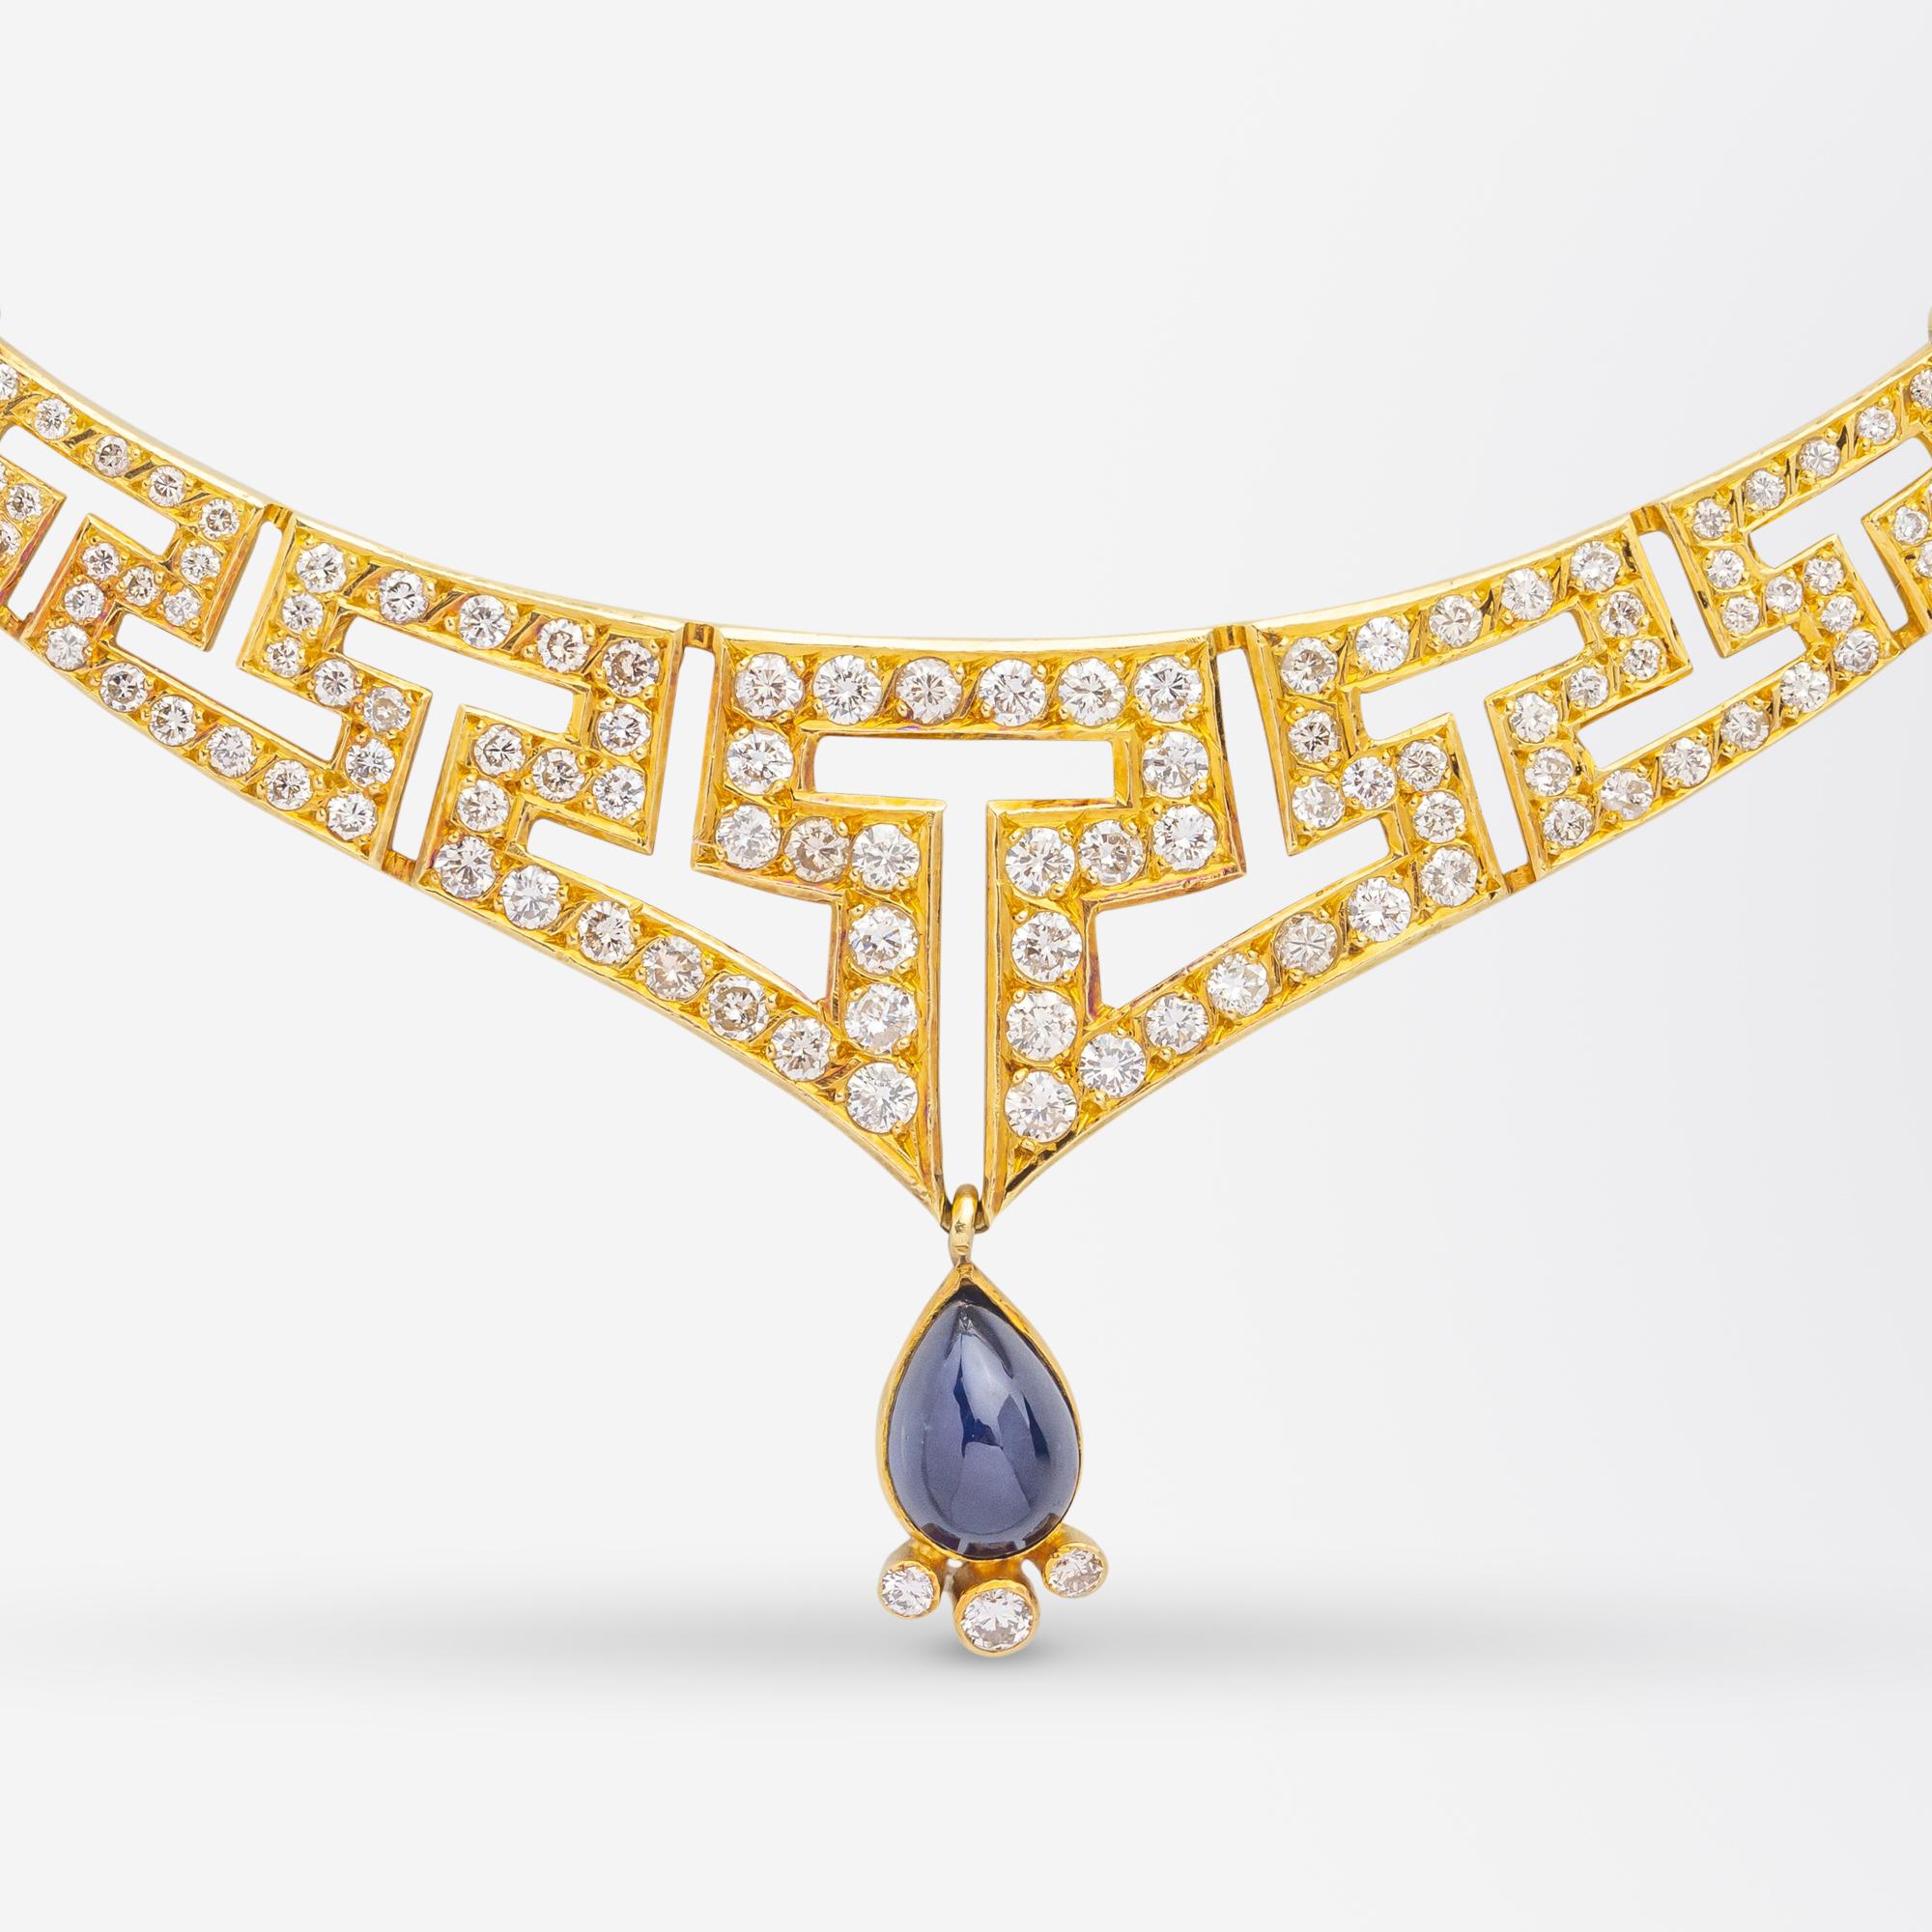 Brilliant Cut Greek Key Necklet in 18 Karat Gold With Diamonds & a Central Sapphire